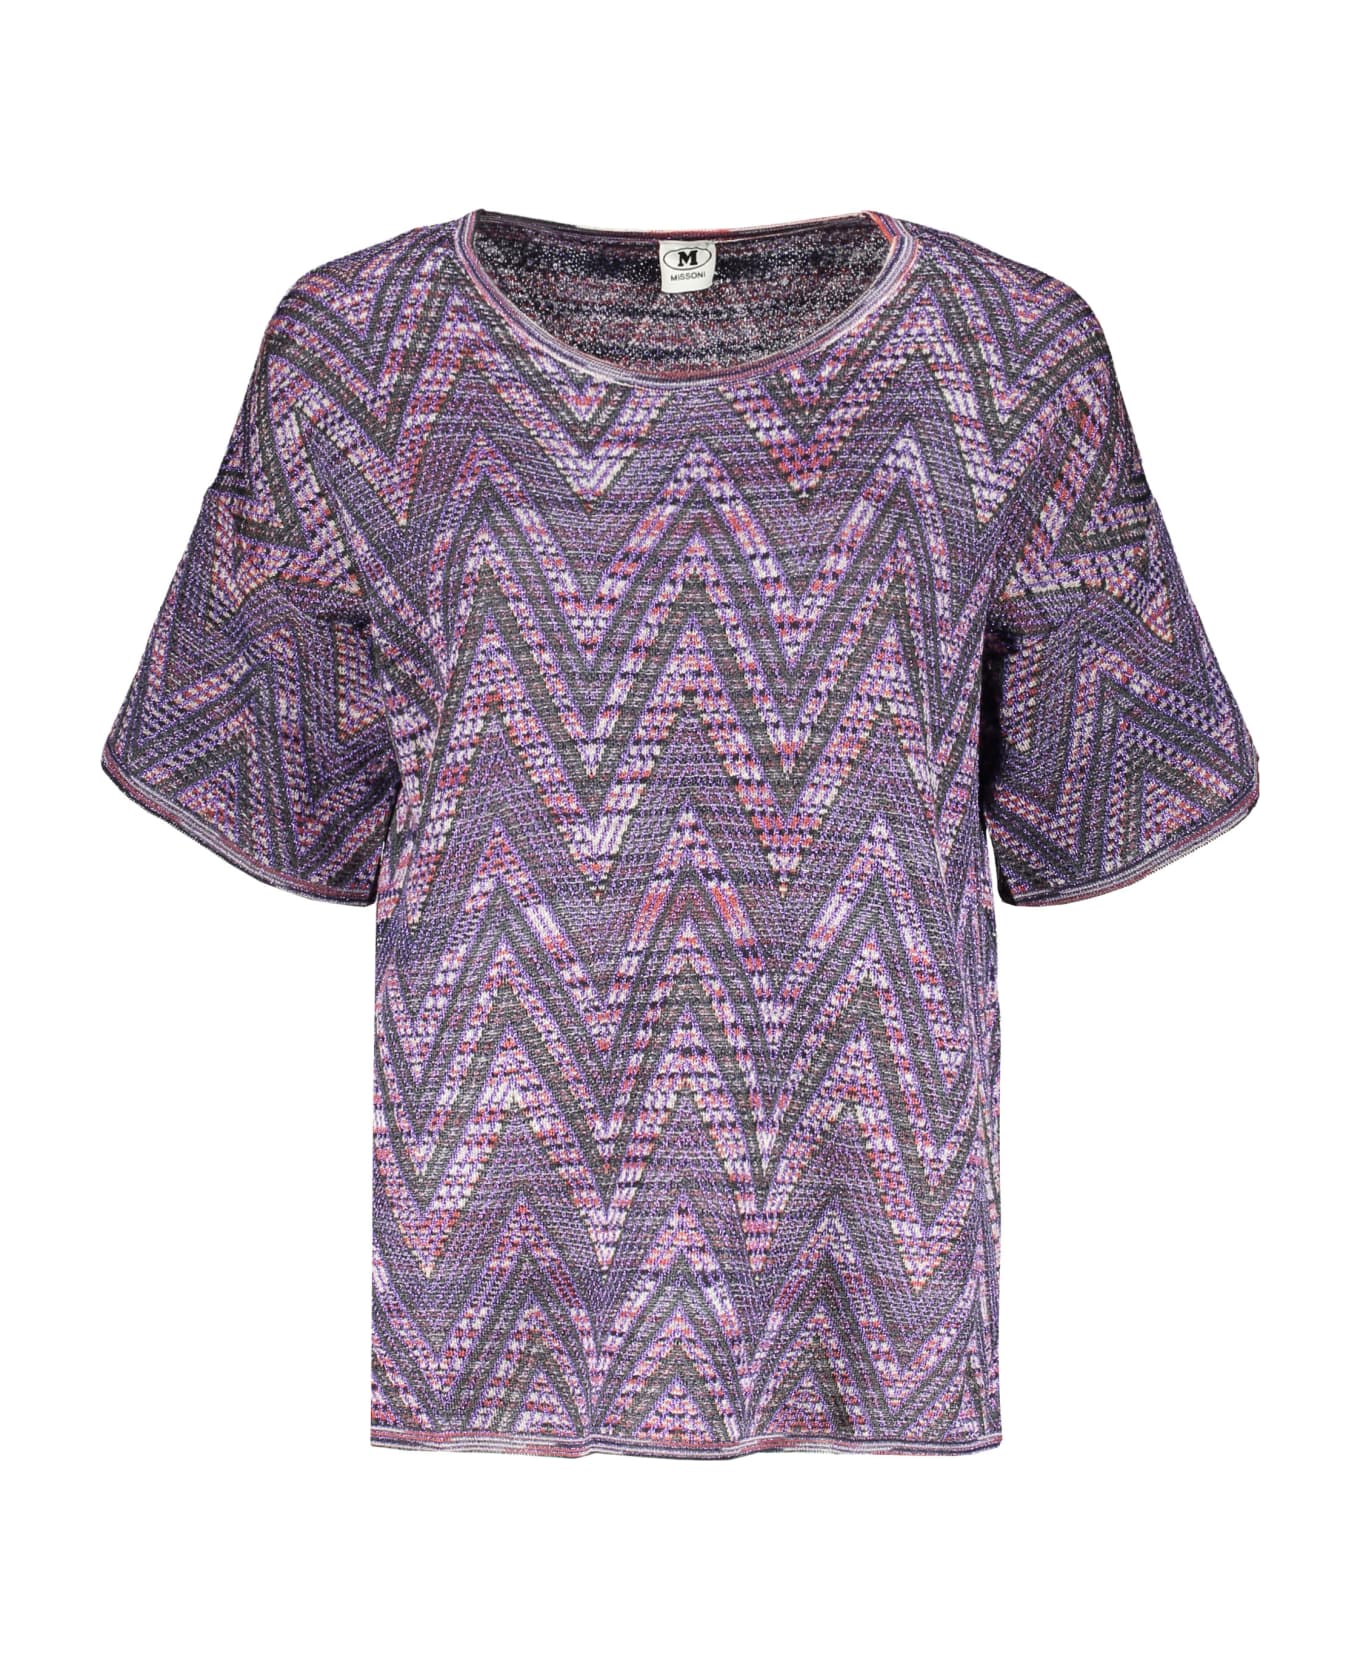 M Missoni Short Sleeve T-shirt - purple